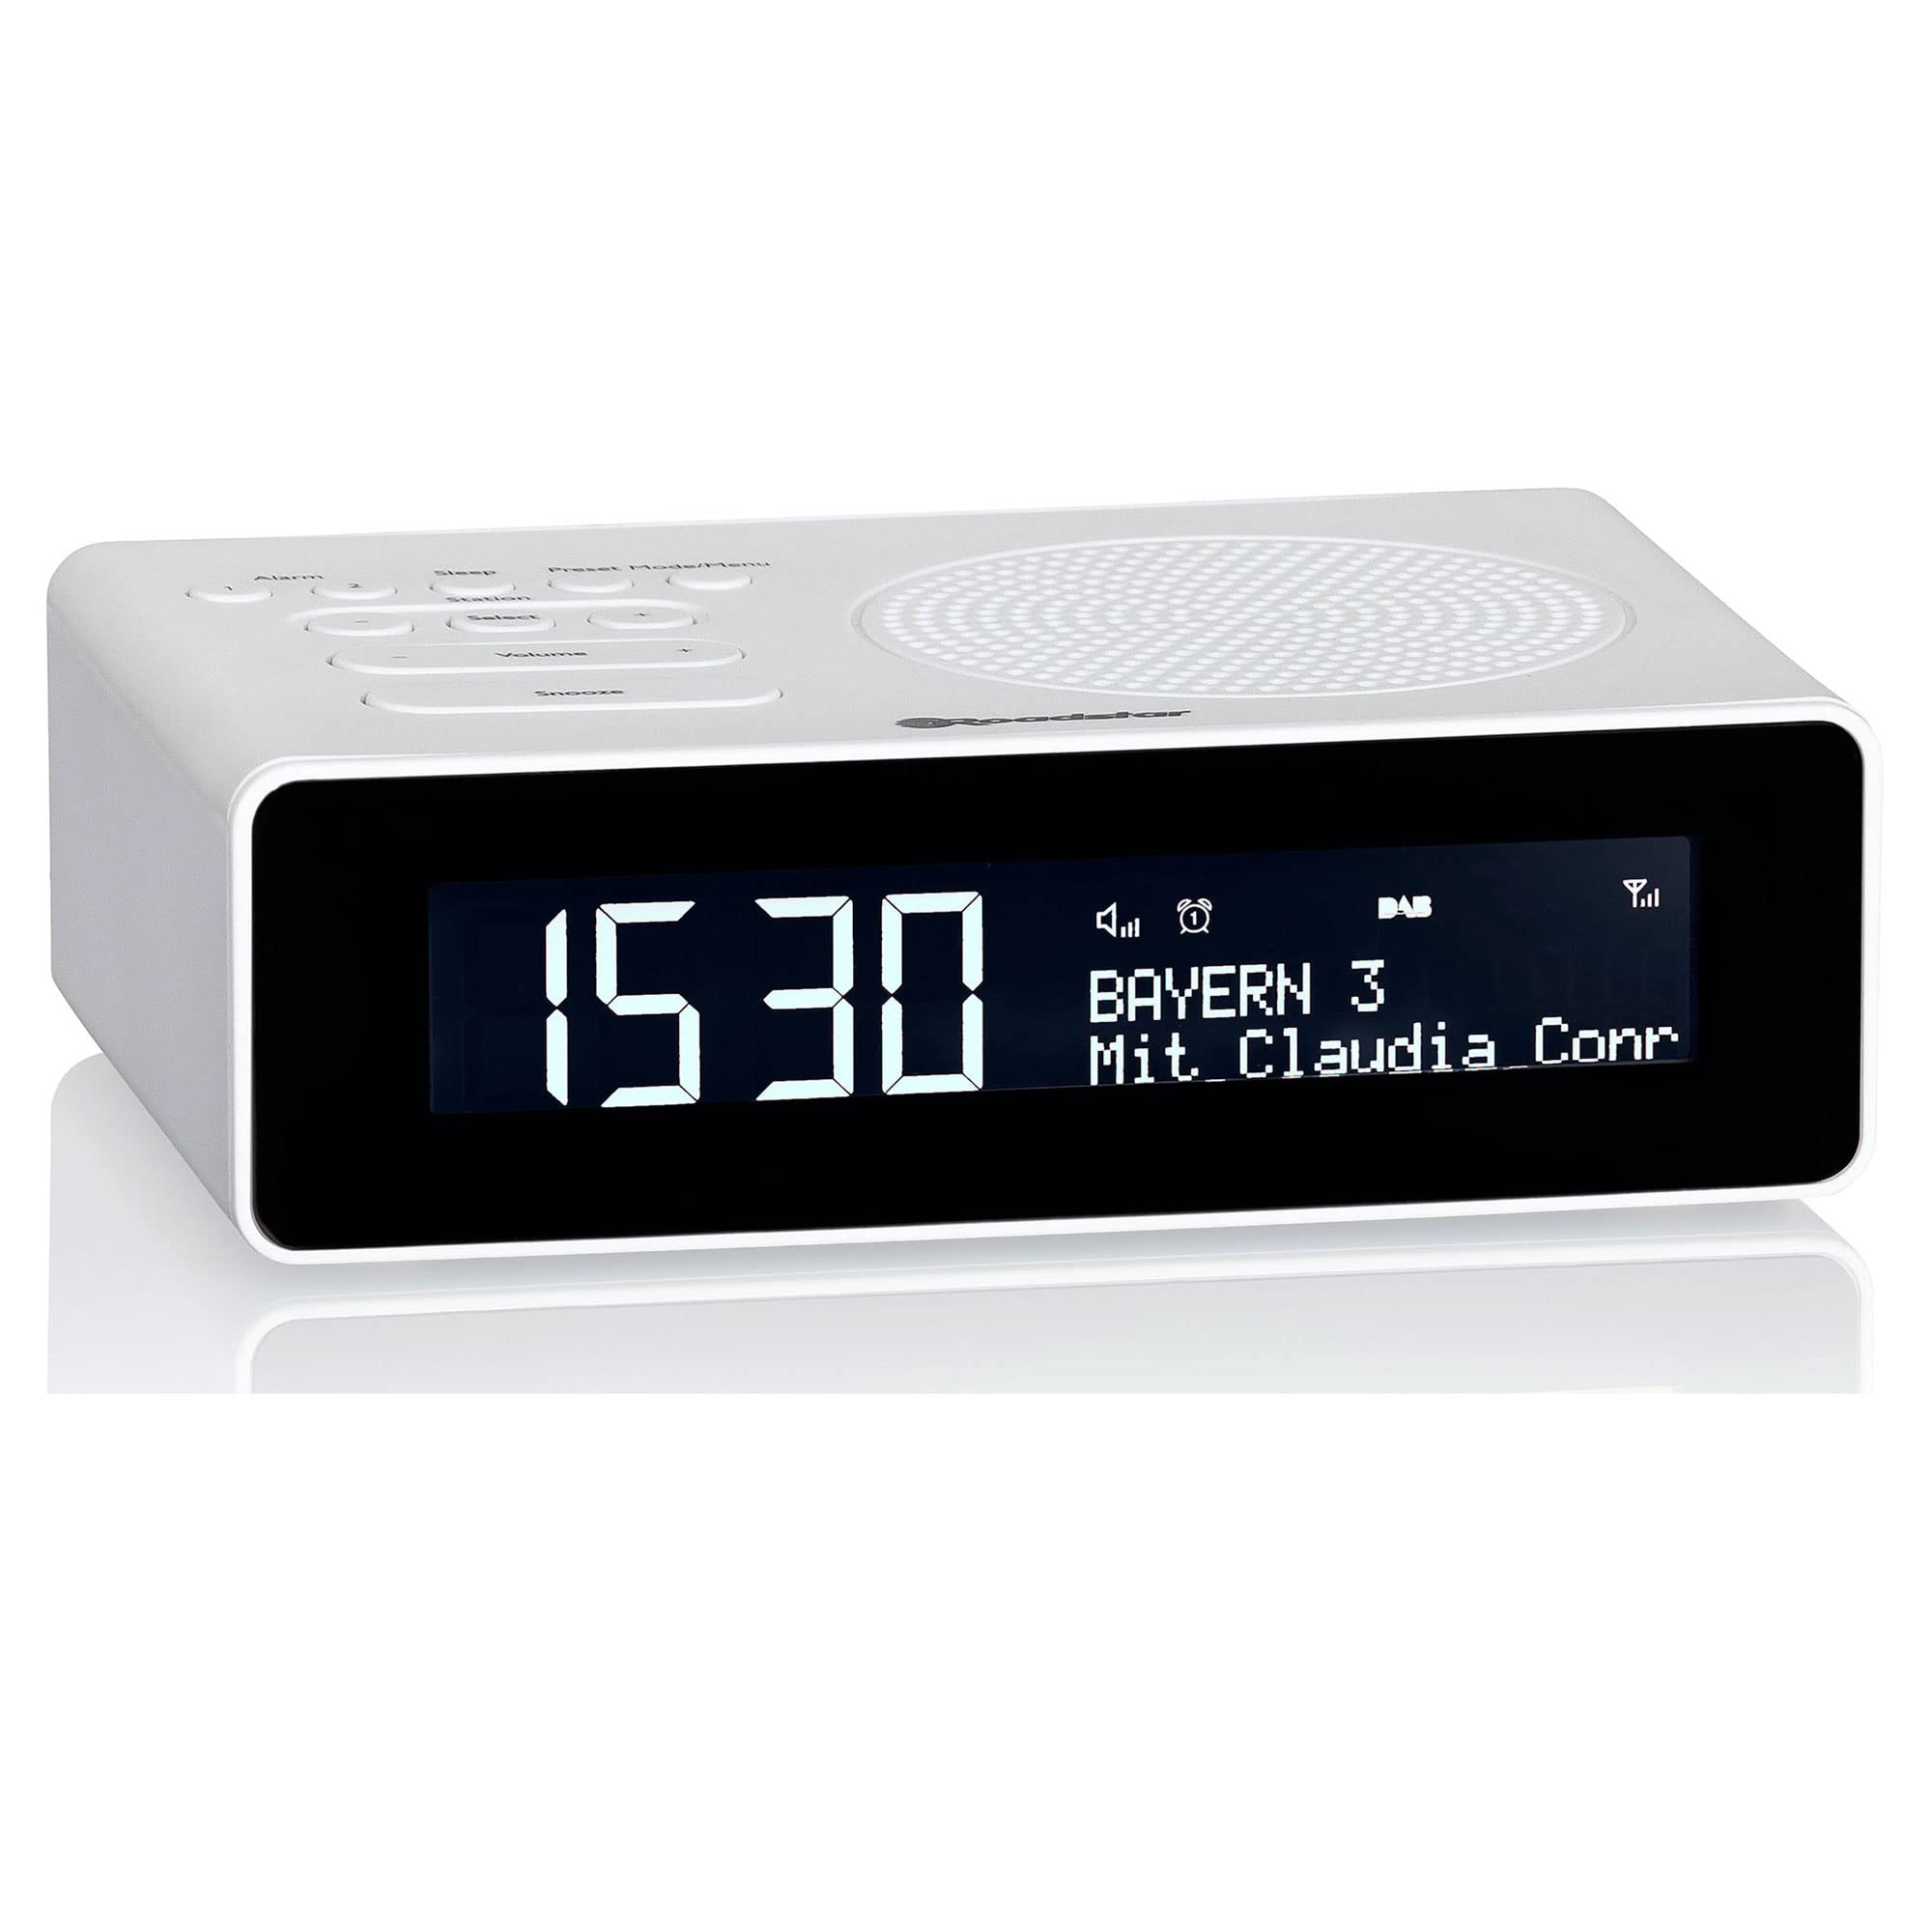 Roadstar CLR-290D+/WH Digitaler Radiowecker DAB/DAB+/FM, 2 Alarme, Großes LCD-Display, USB-Ladegerät, Schlummerfunktion, Weiß